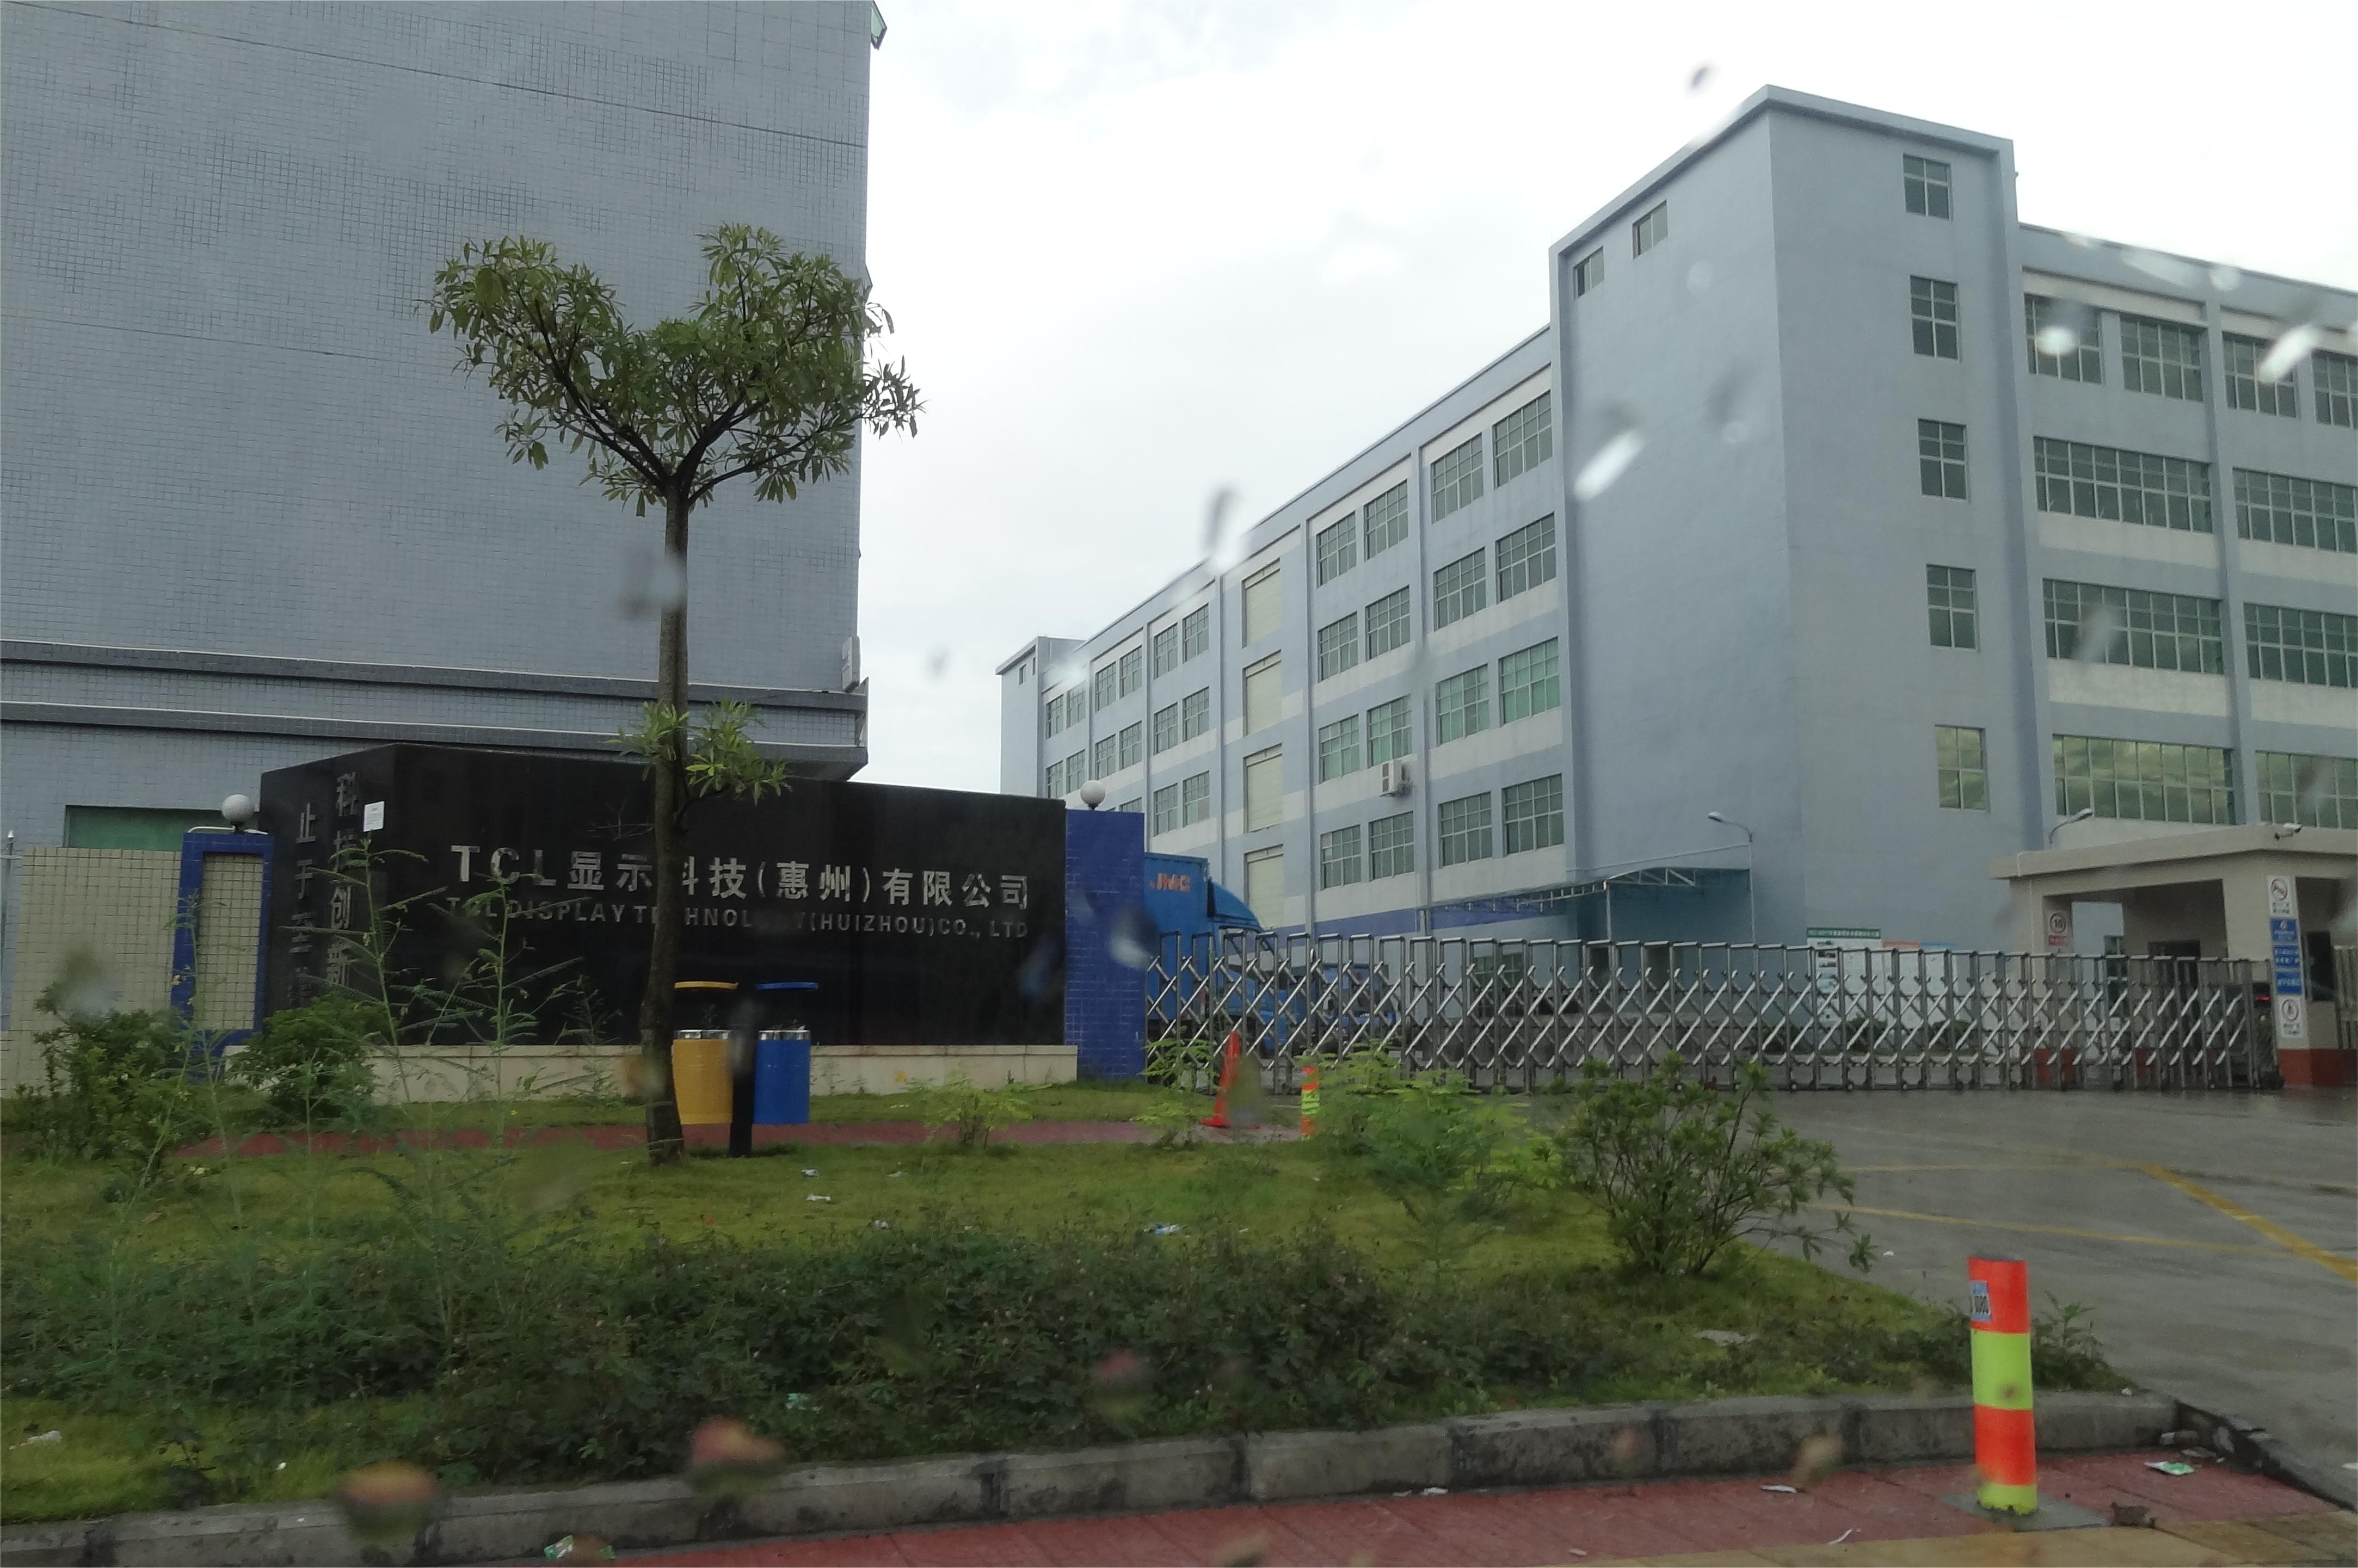 TCL显示科技（惠州）有限公司